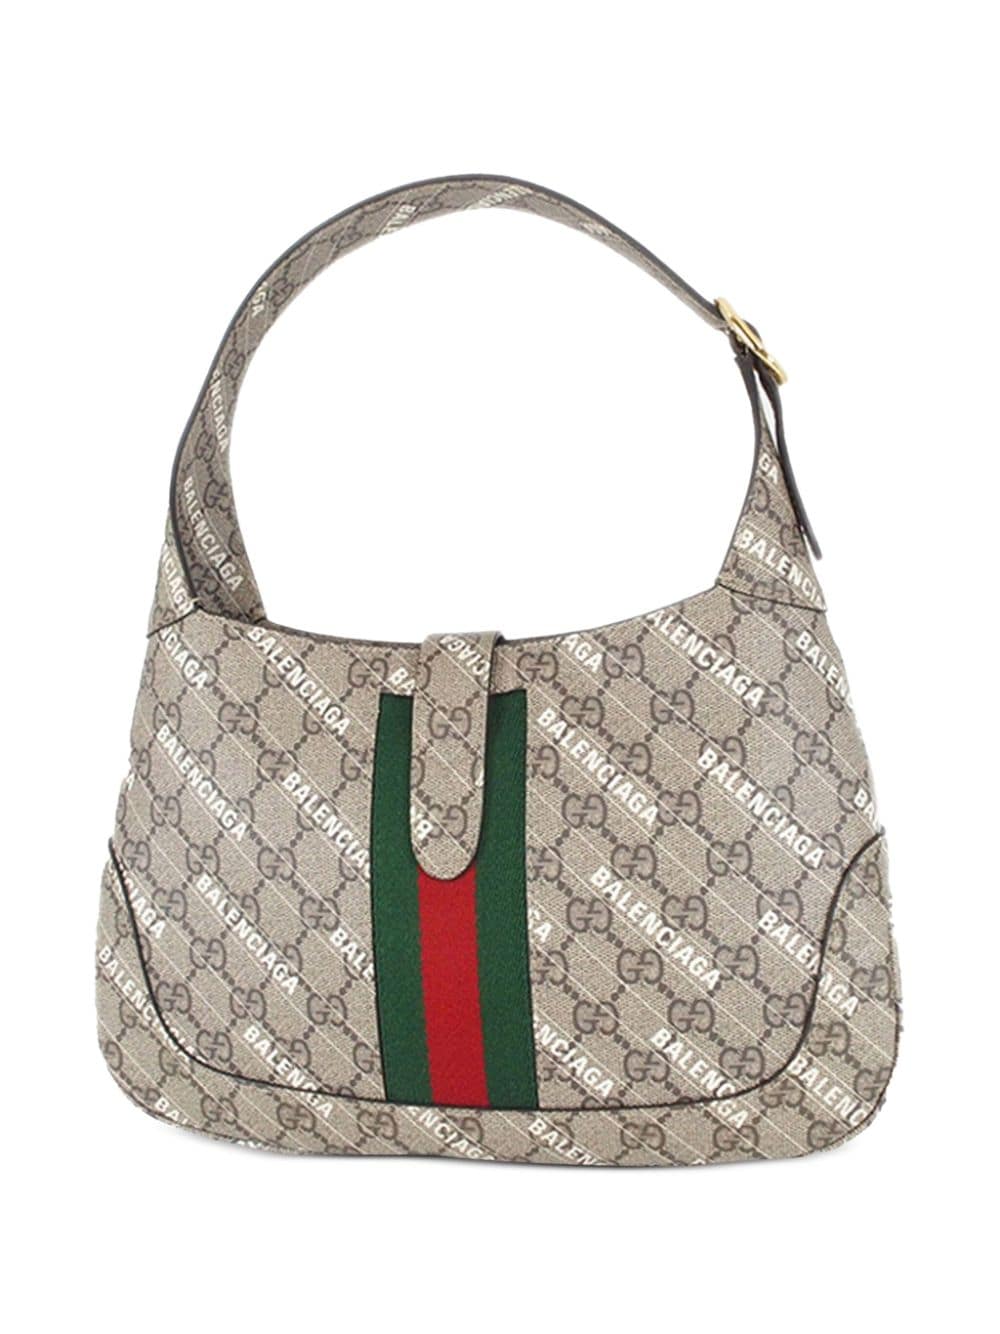 Gucci Jackie 1961 small shoulder bag  Gucci jackie bag, Bags, Gucci  shoulder bag